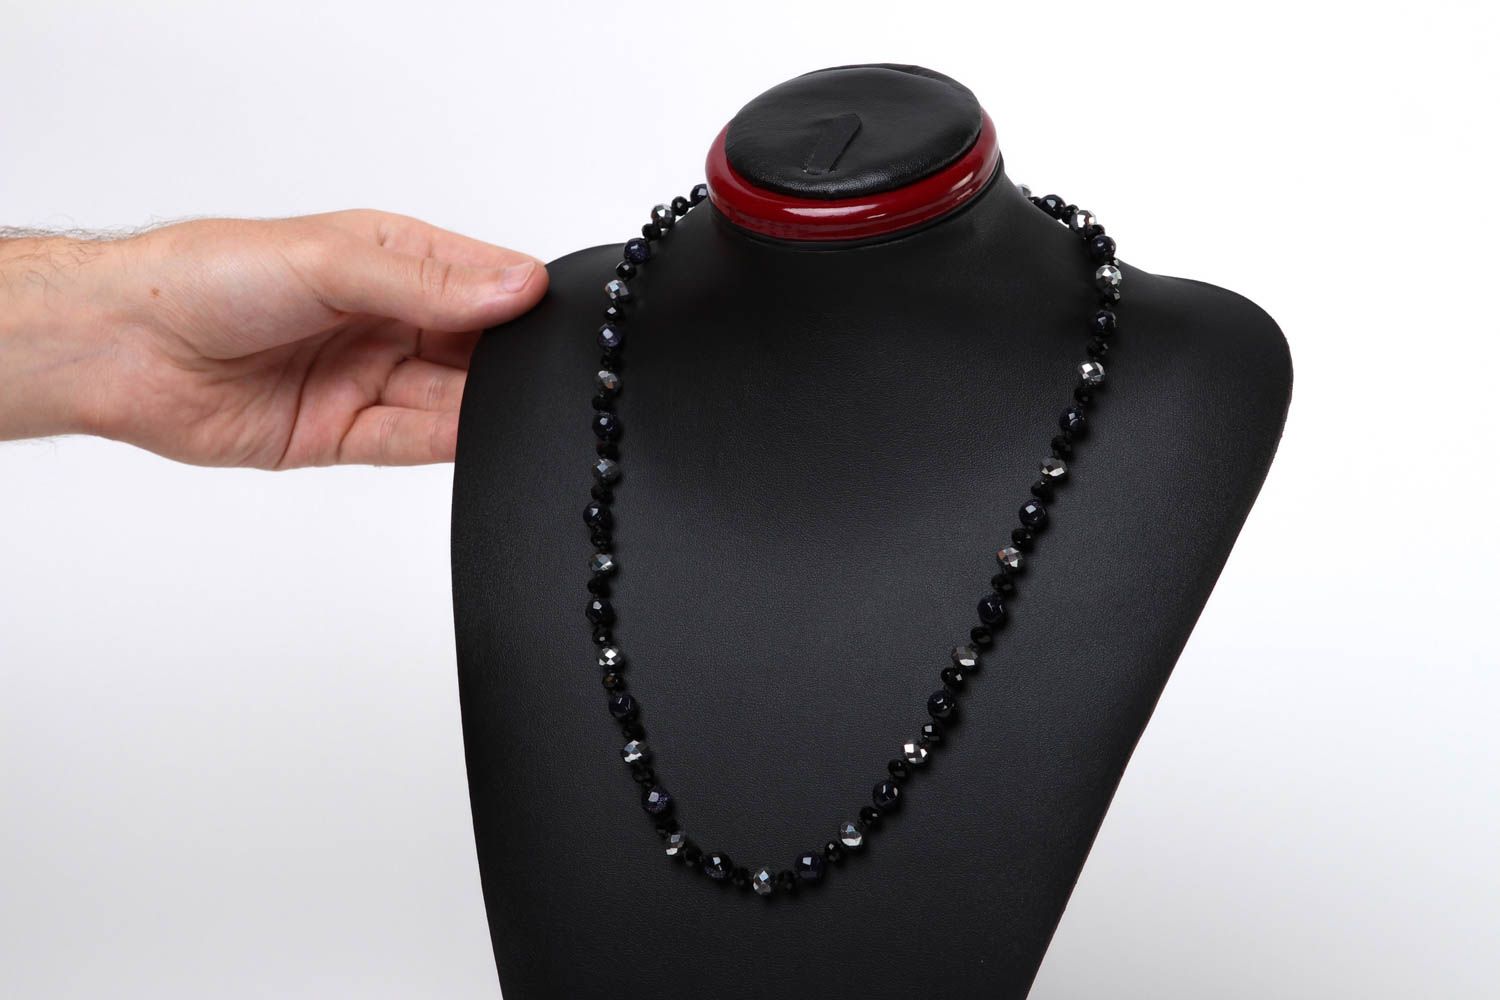 Handmade bead necklace designer accessory gift idea unusual gift fashion jewelry photo 5